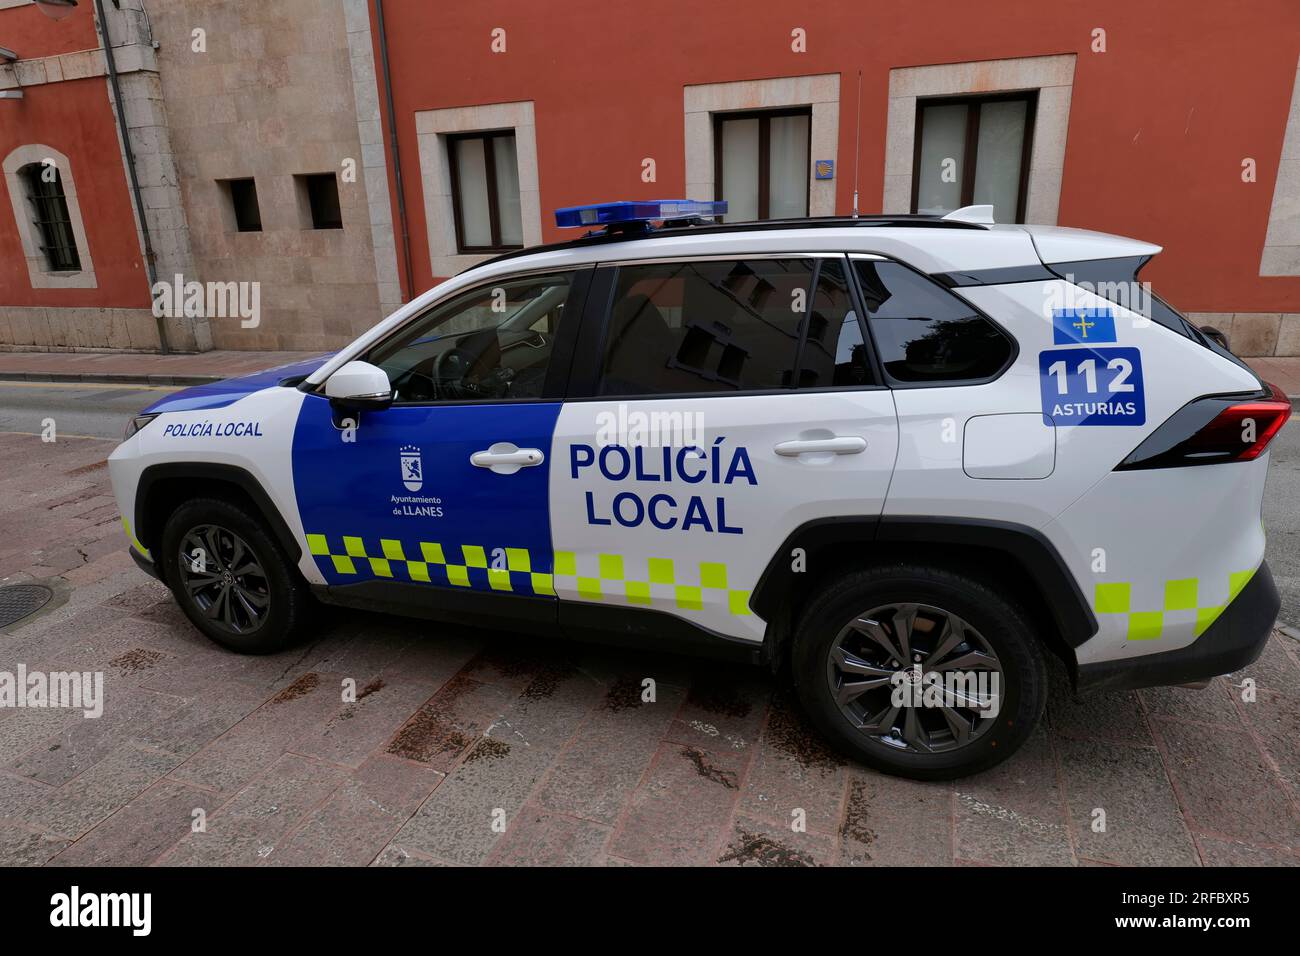 Coche policia español fotografías e imágenes de alta resolución - Alamy